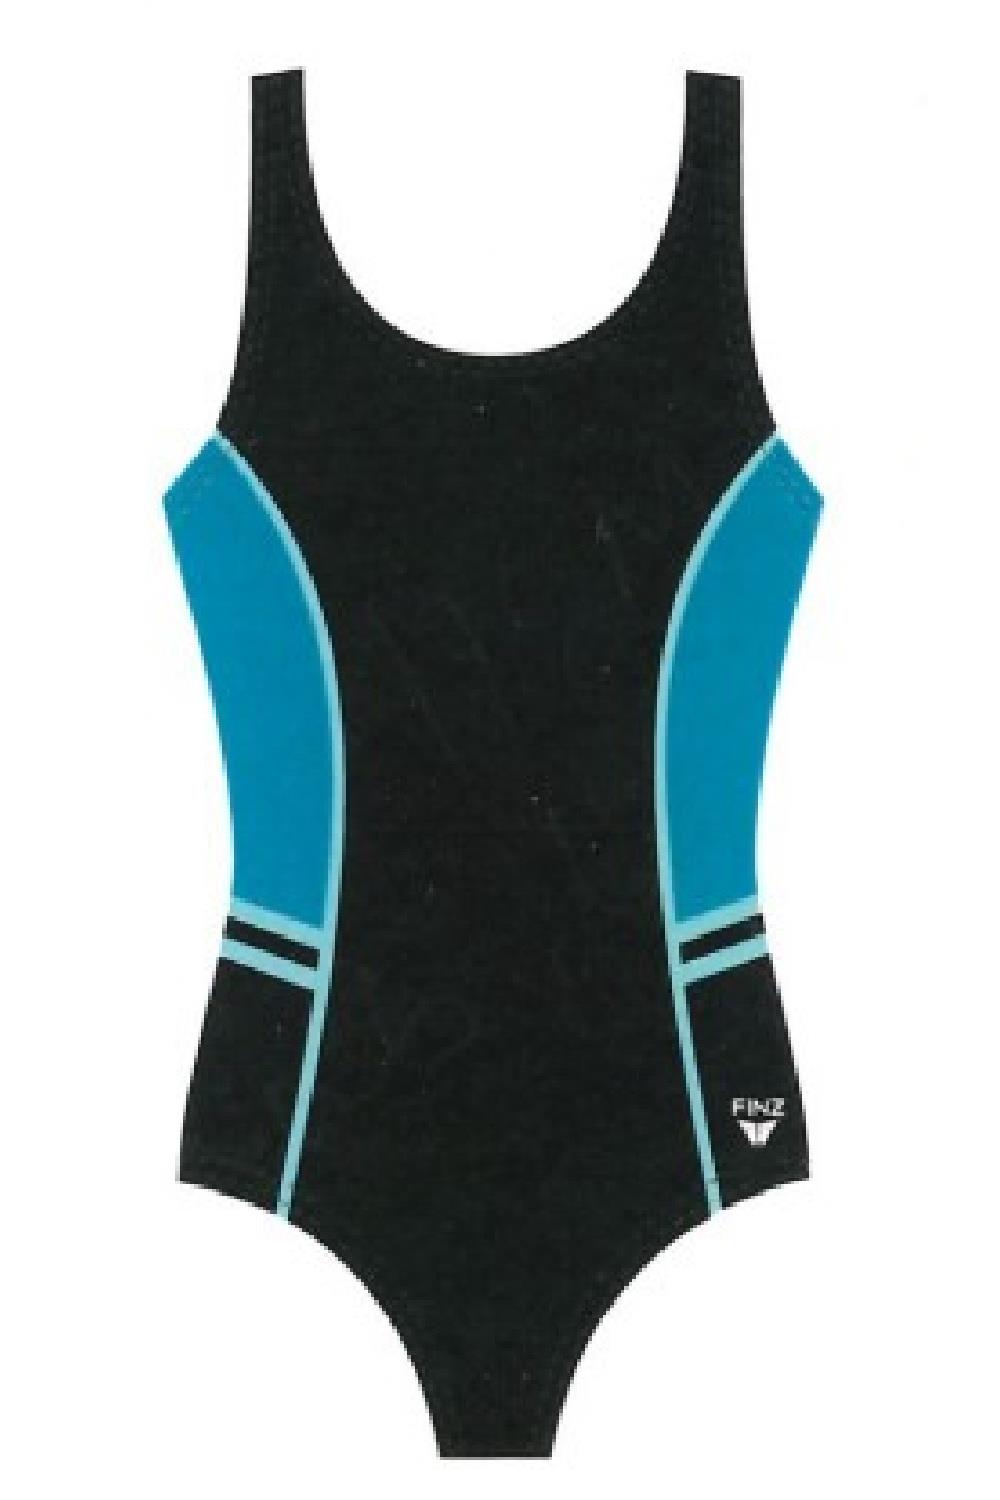 Finz Chlorine Resistant Swim Suit FZPO60910CDD – My Top Drawer